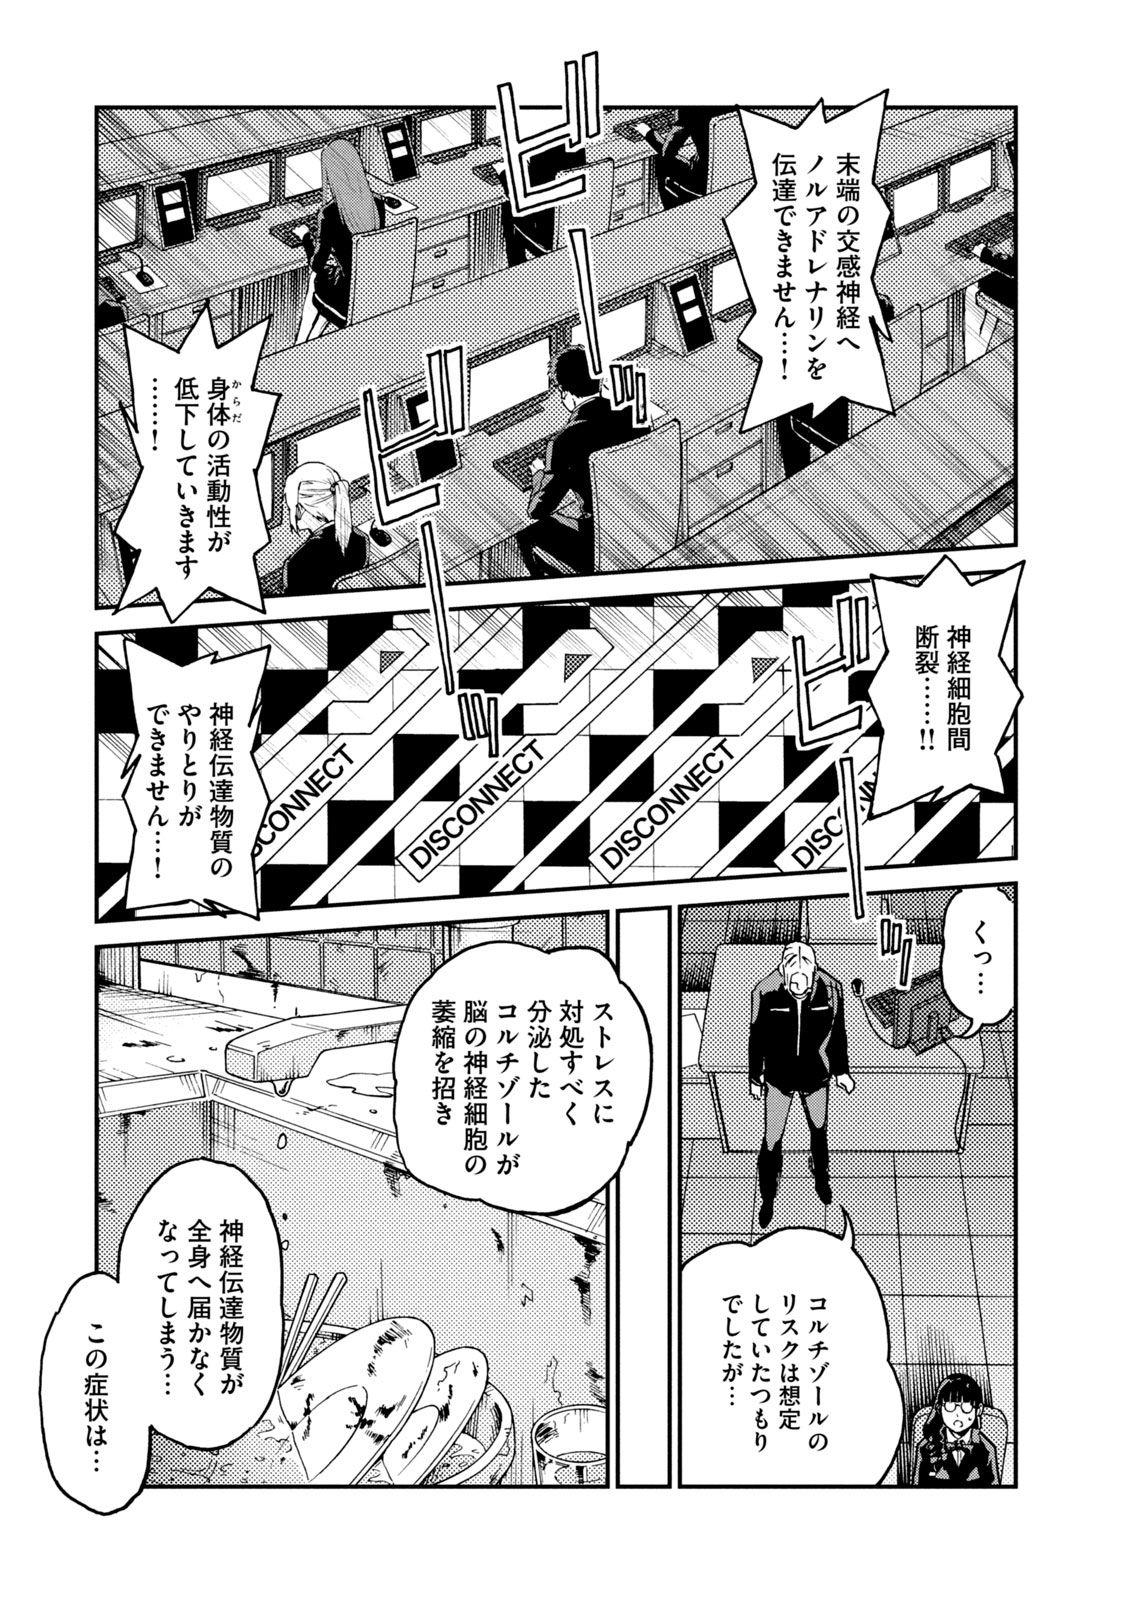 Hataraku Saibou BLACK - Chapter 33 - Page 29